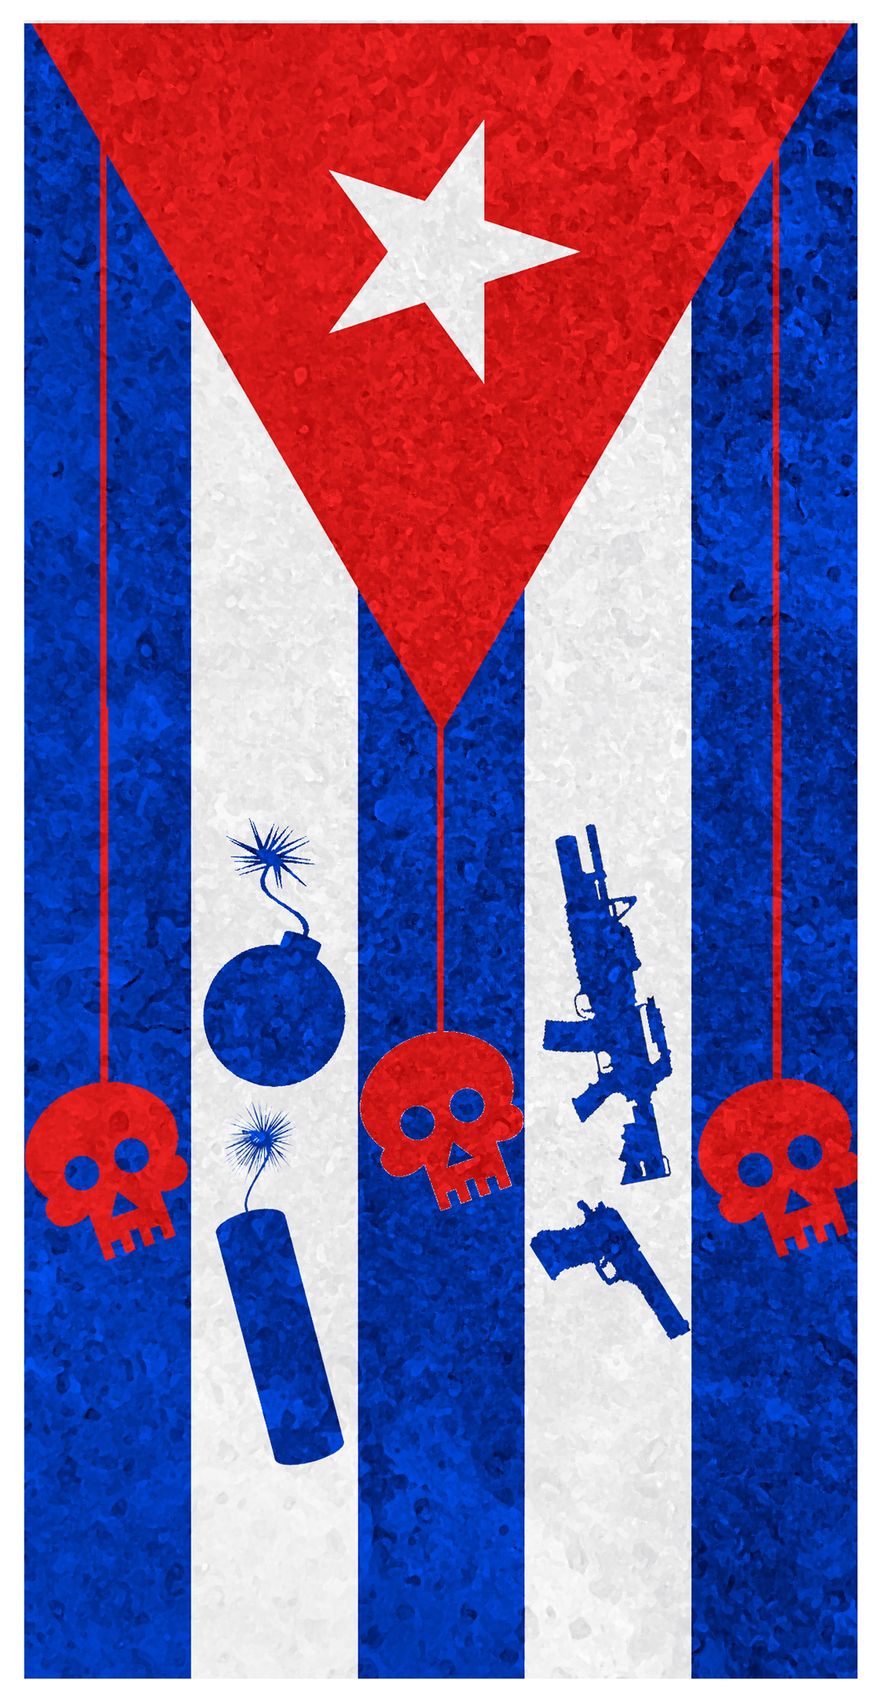 Illustration on Cuban sponsorship of terrorism by Alexander Hunter/The Washington Times